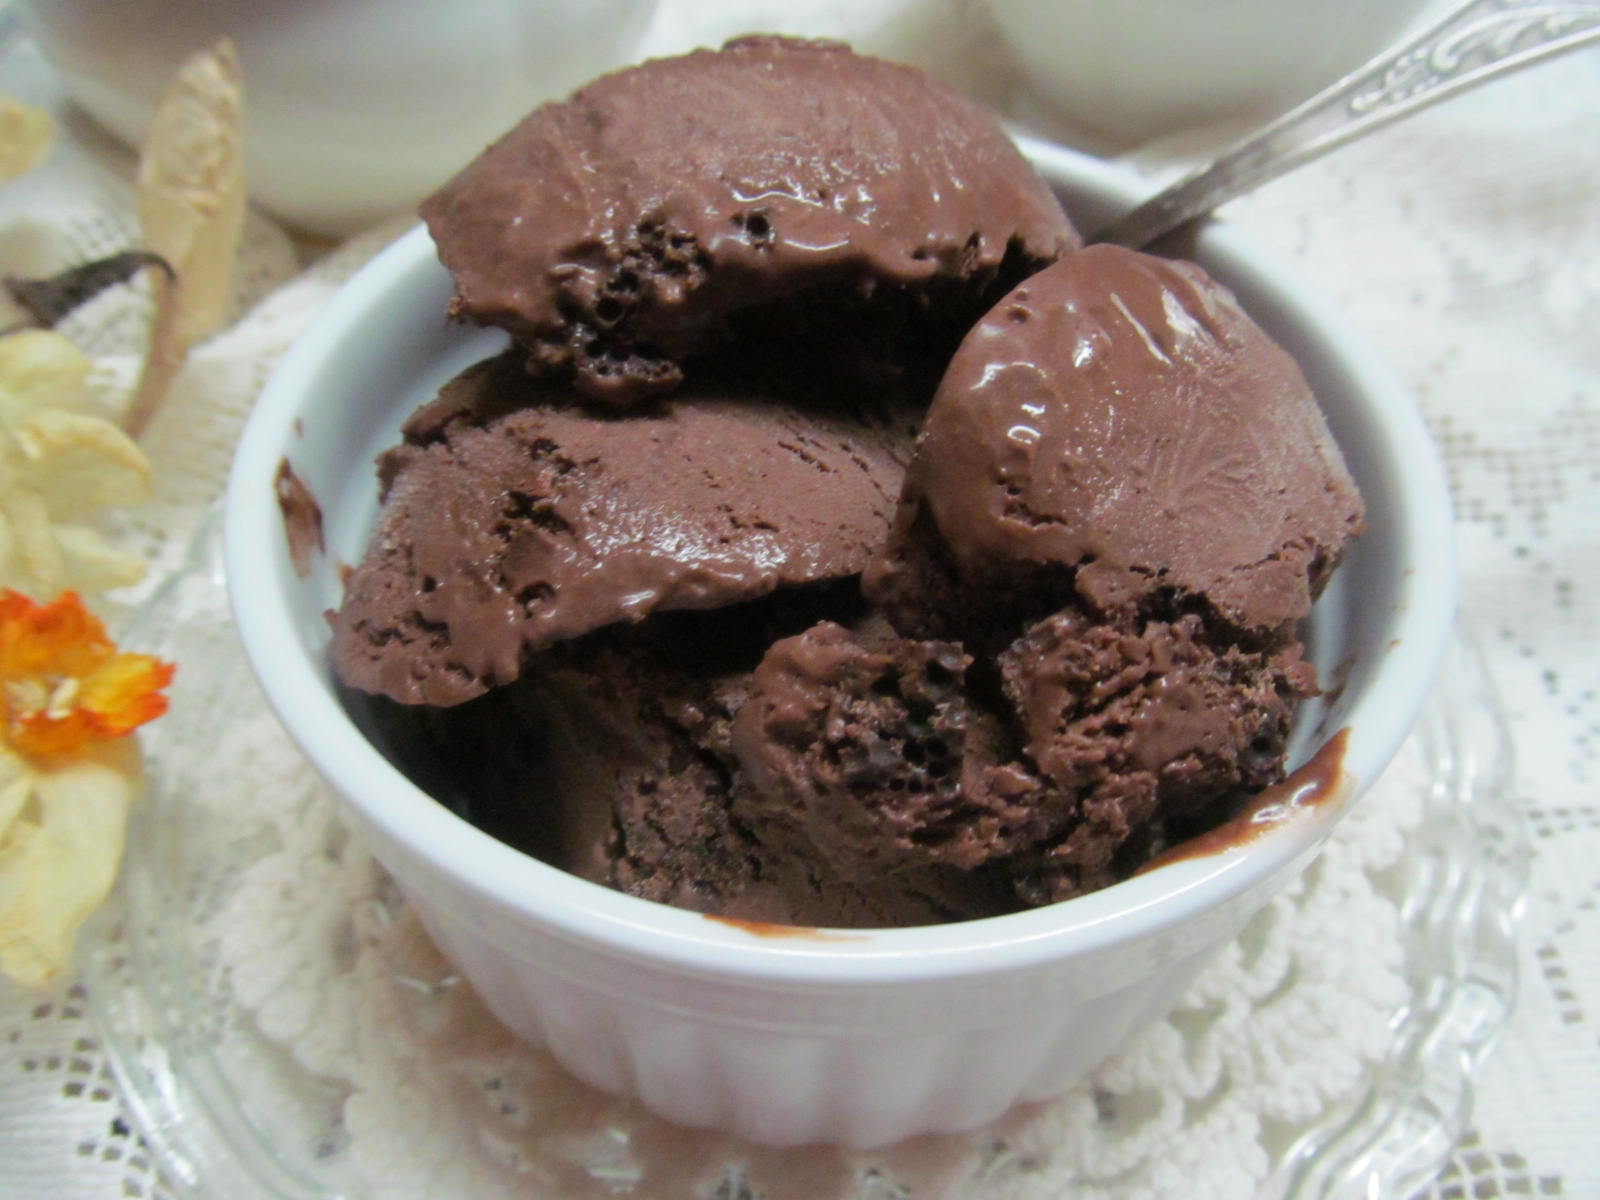 25 рецептов мороженого от «Едим Дома»